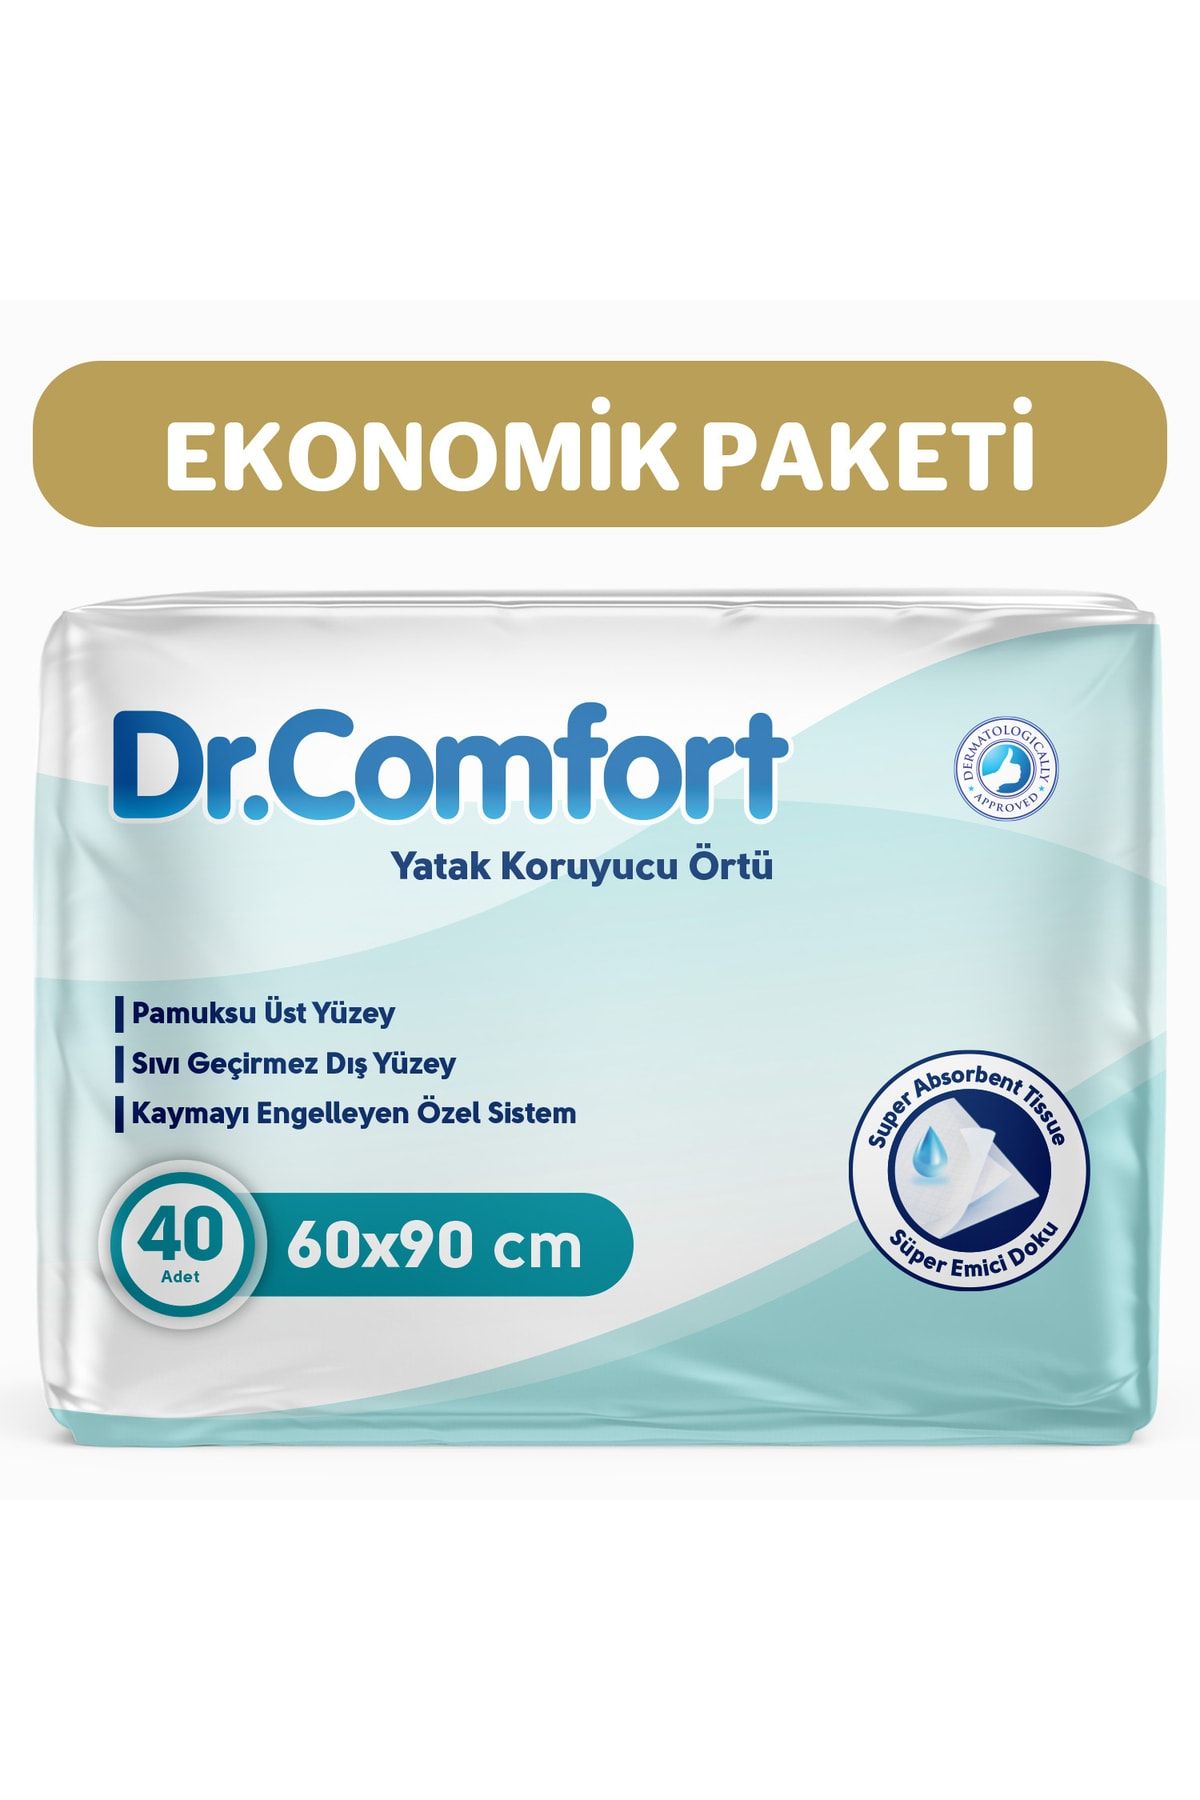 Dr.Comfort Dr Comfort 60x90 Yatak Koruyucu Örtü 10'lu 4 Paket 40 Adet